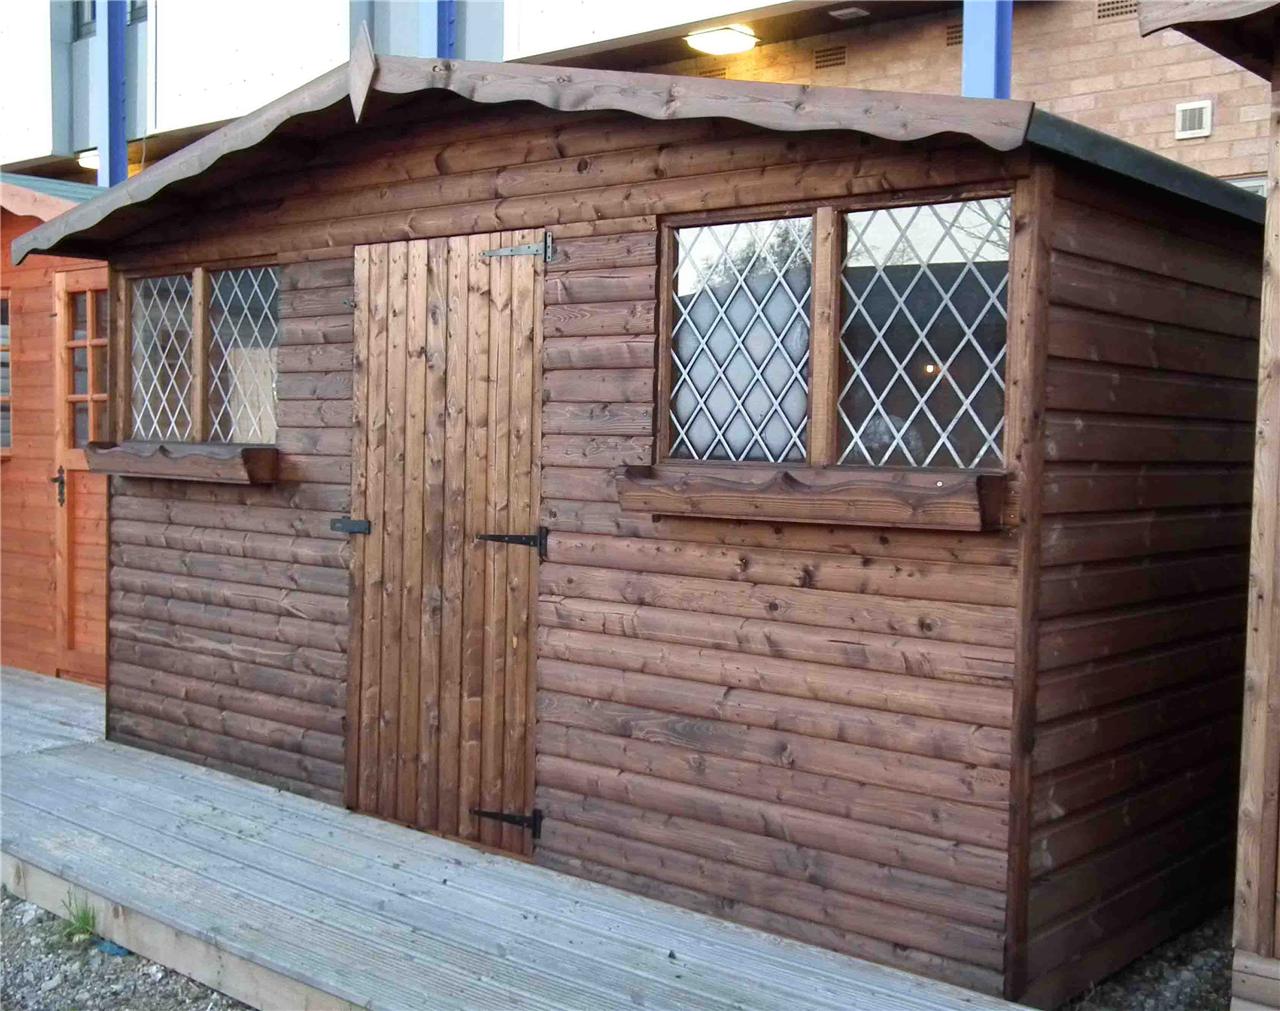 Garden shed/wooden shed/Garden sheds/summerhouse | eBay